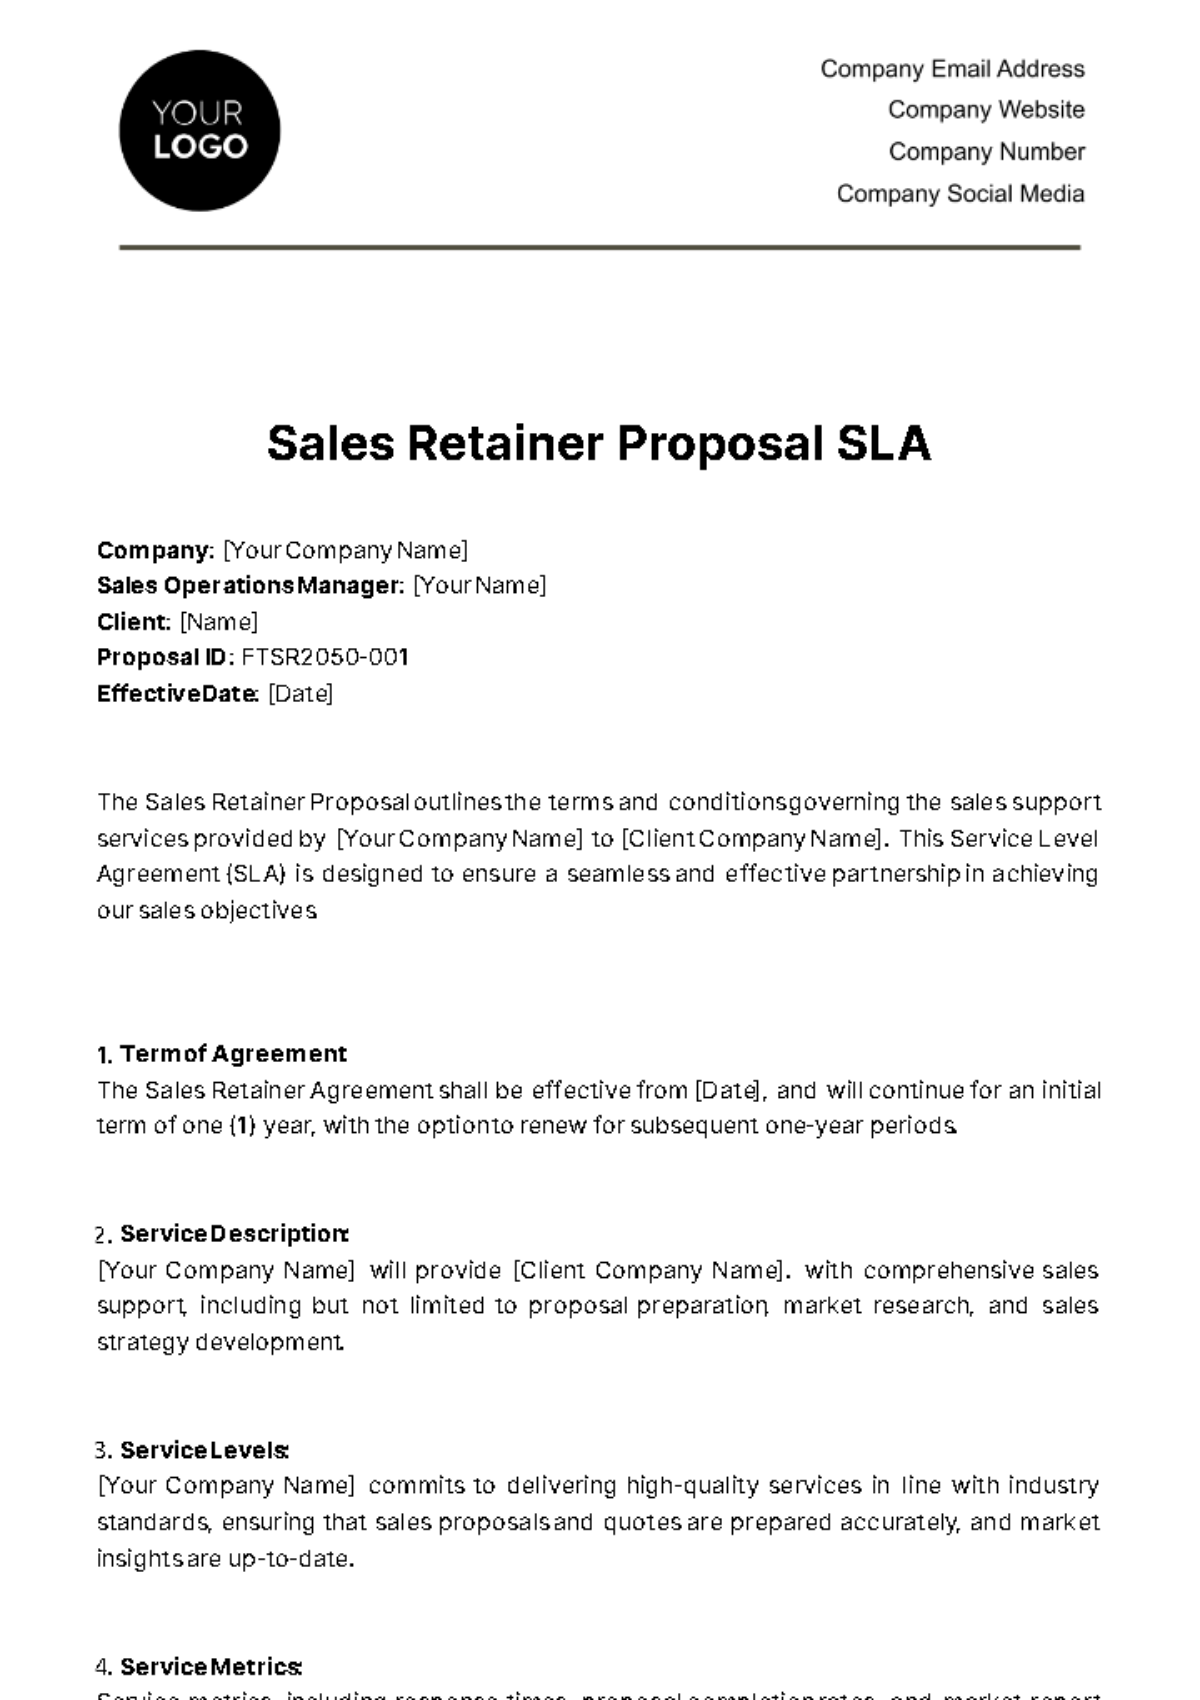 Free Sales Retainer Proposal SLA Template